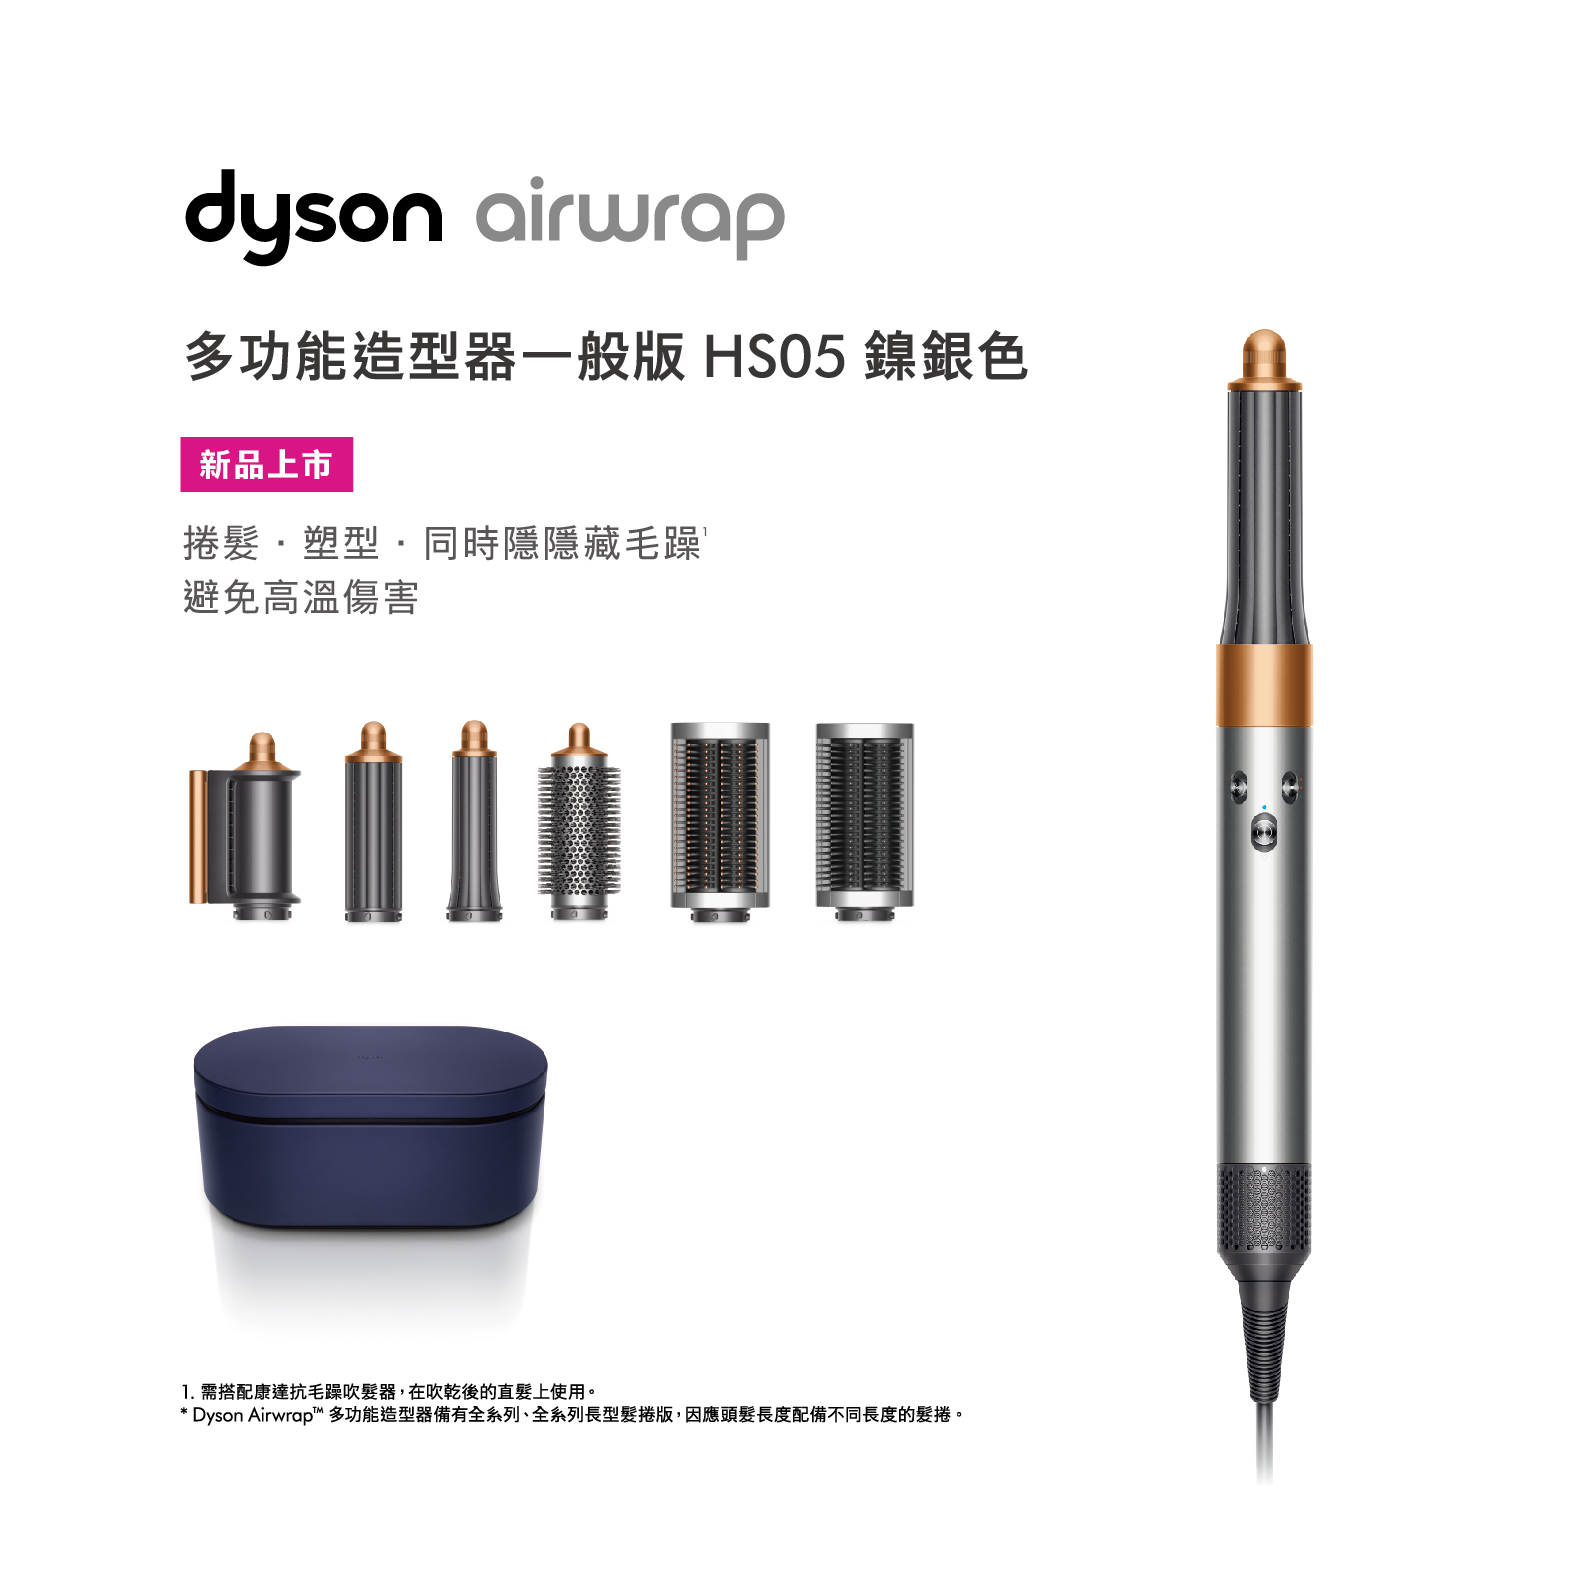 Dyson Airwrap 多功能造型器 HS05 鎳銀色